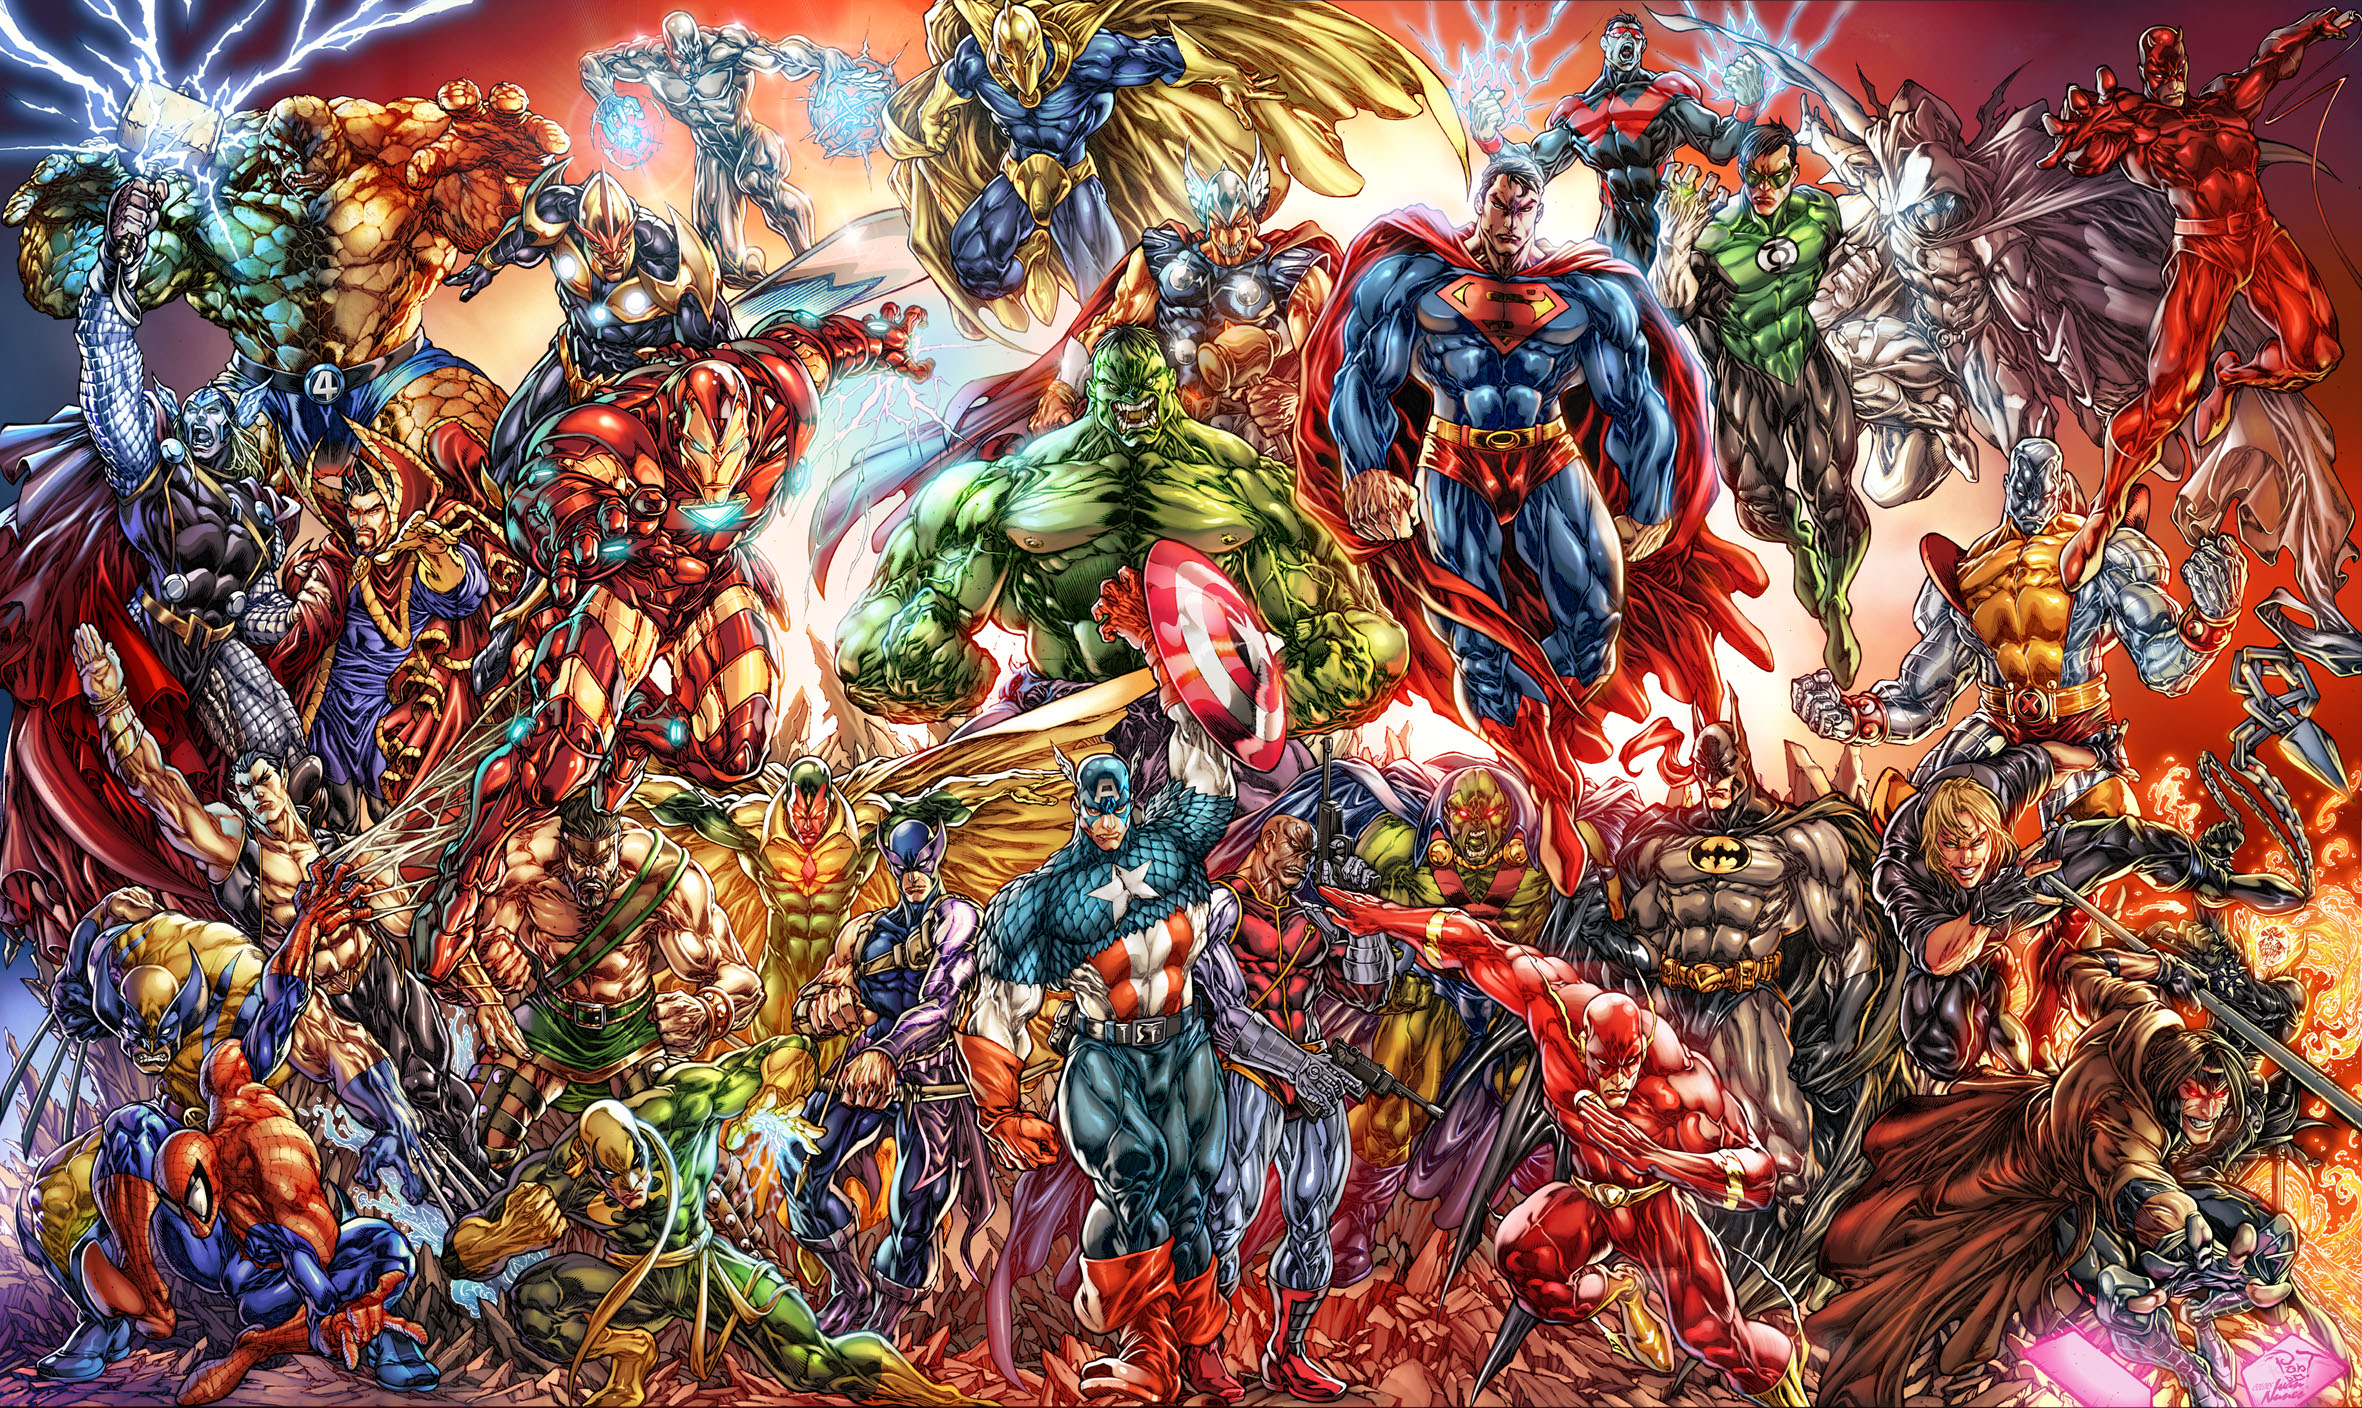 batman, superman, vision (marvel comics), comics, hulk, spider man, collage, dc comics, daredevil, ghost rider, iron man, thor, hal jordan, martian manhunter, barry allen, wolverine, ben grimm, beta ray bill, captain america, clint barton, colossus, danny rand, deathlok, doctor fate (dc comics), doctor strange, flash, gambit (marvel comics), green lantern, hawkeye, hercules (marvel comics), iron fist (marvel comics), j'onn j'onzz, longshot (marvel comics), moon knight, namor the sub mariner, nightwing, nova (marvel comics), peter parker, silver surfer, sub mariner, thing (marvel comics), wonder man Full HD